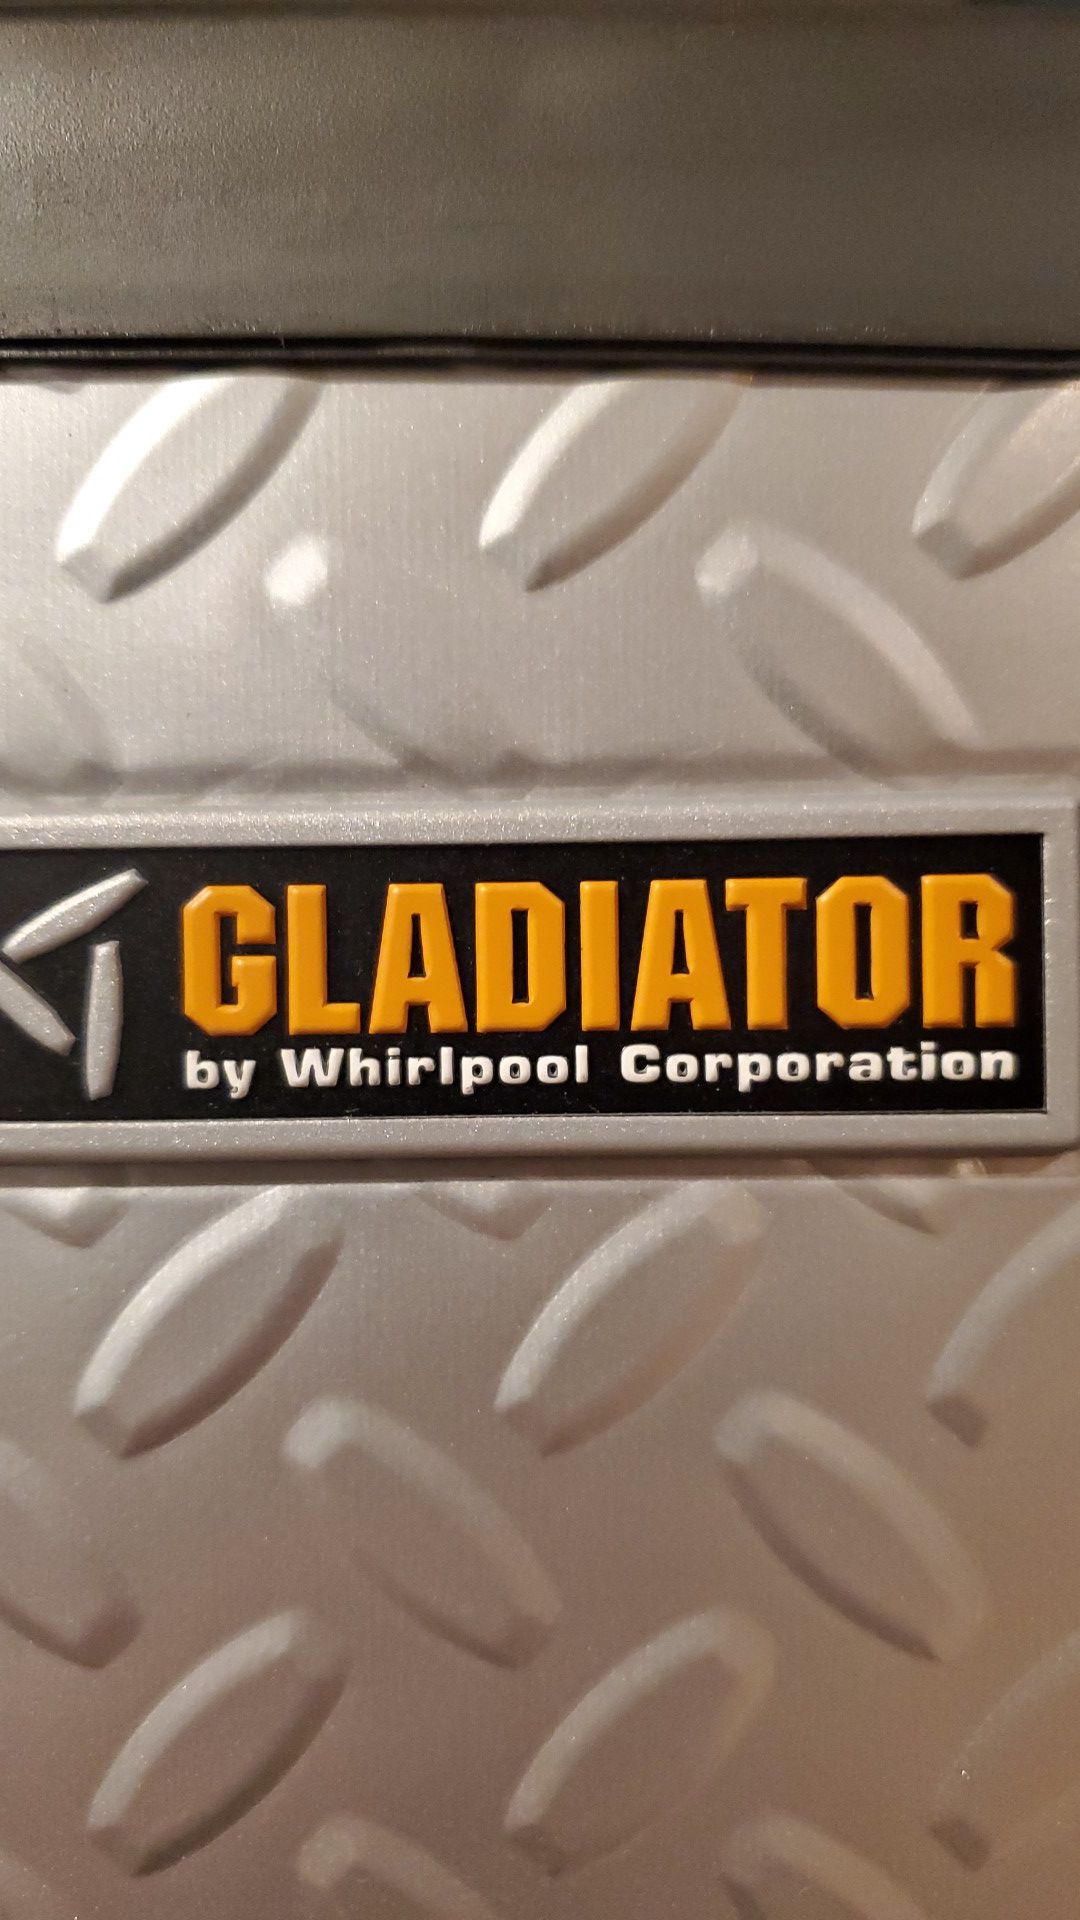 Gladiator by Whirlpool Corporation refrigerator